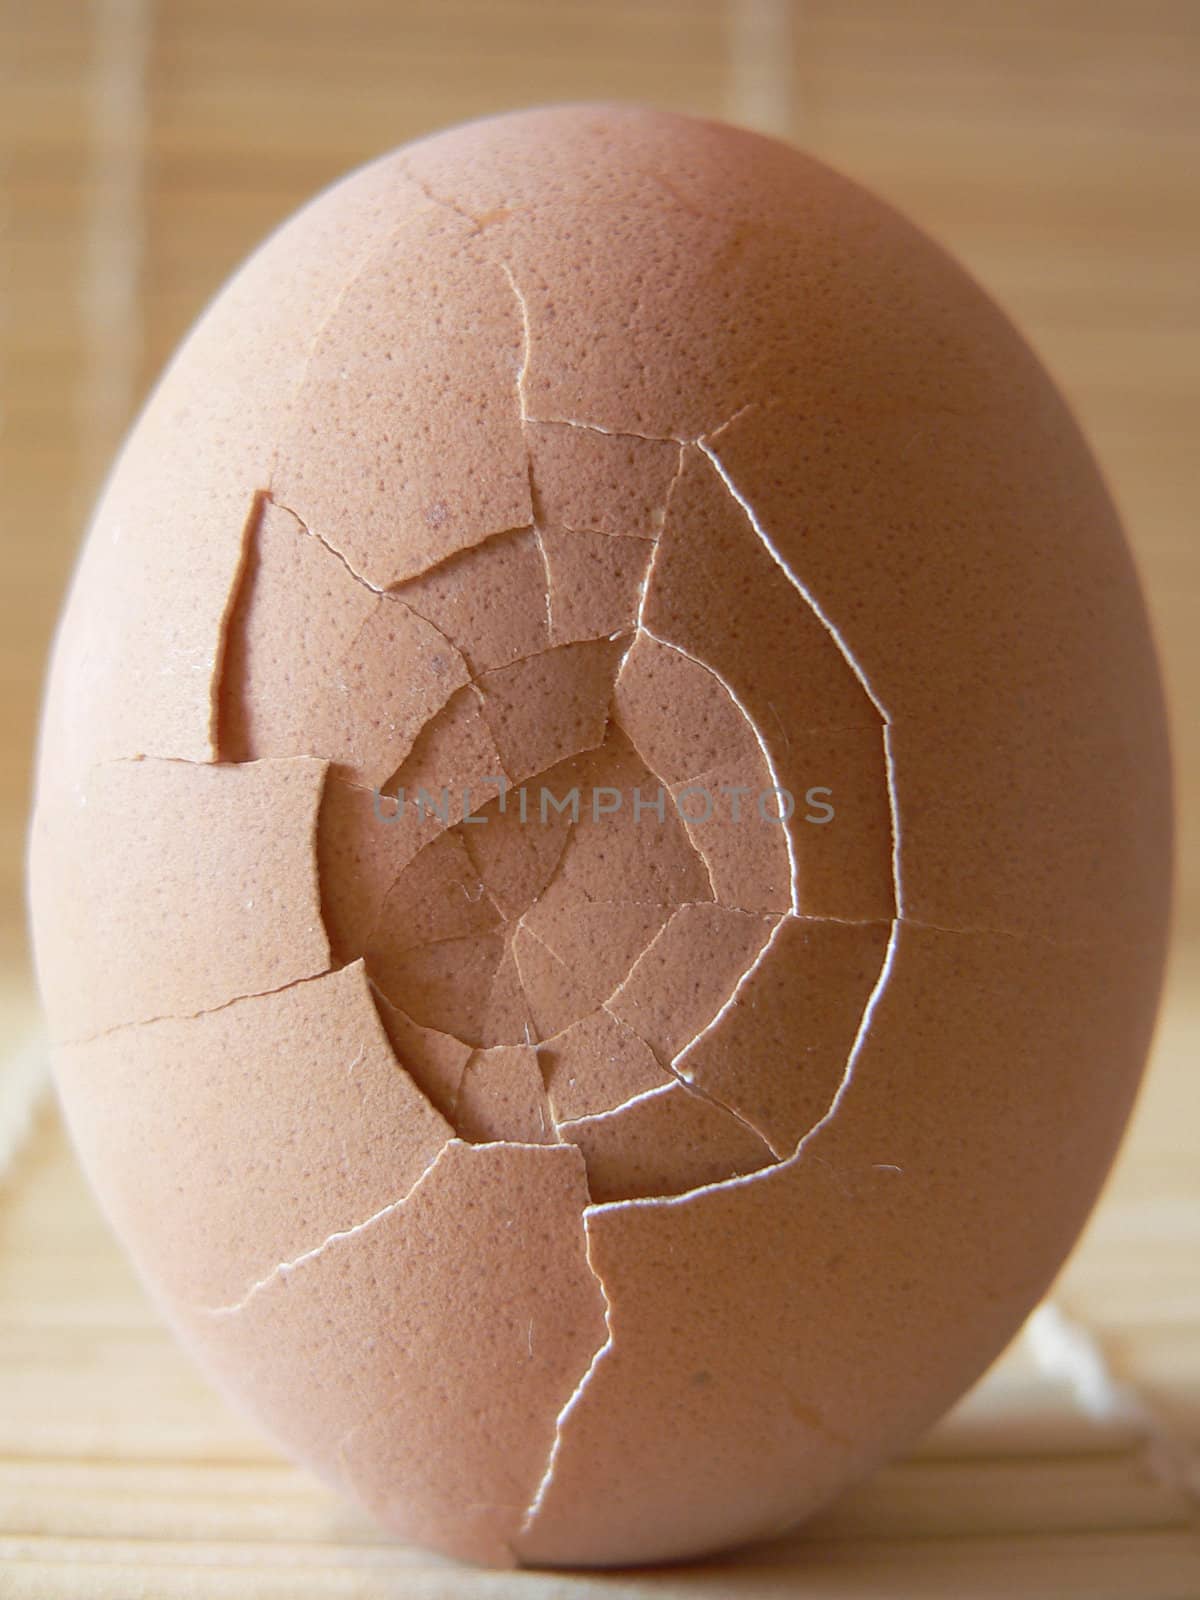  a broken egg close up